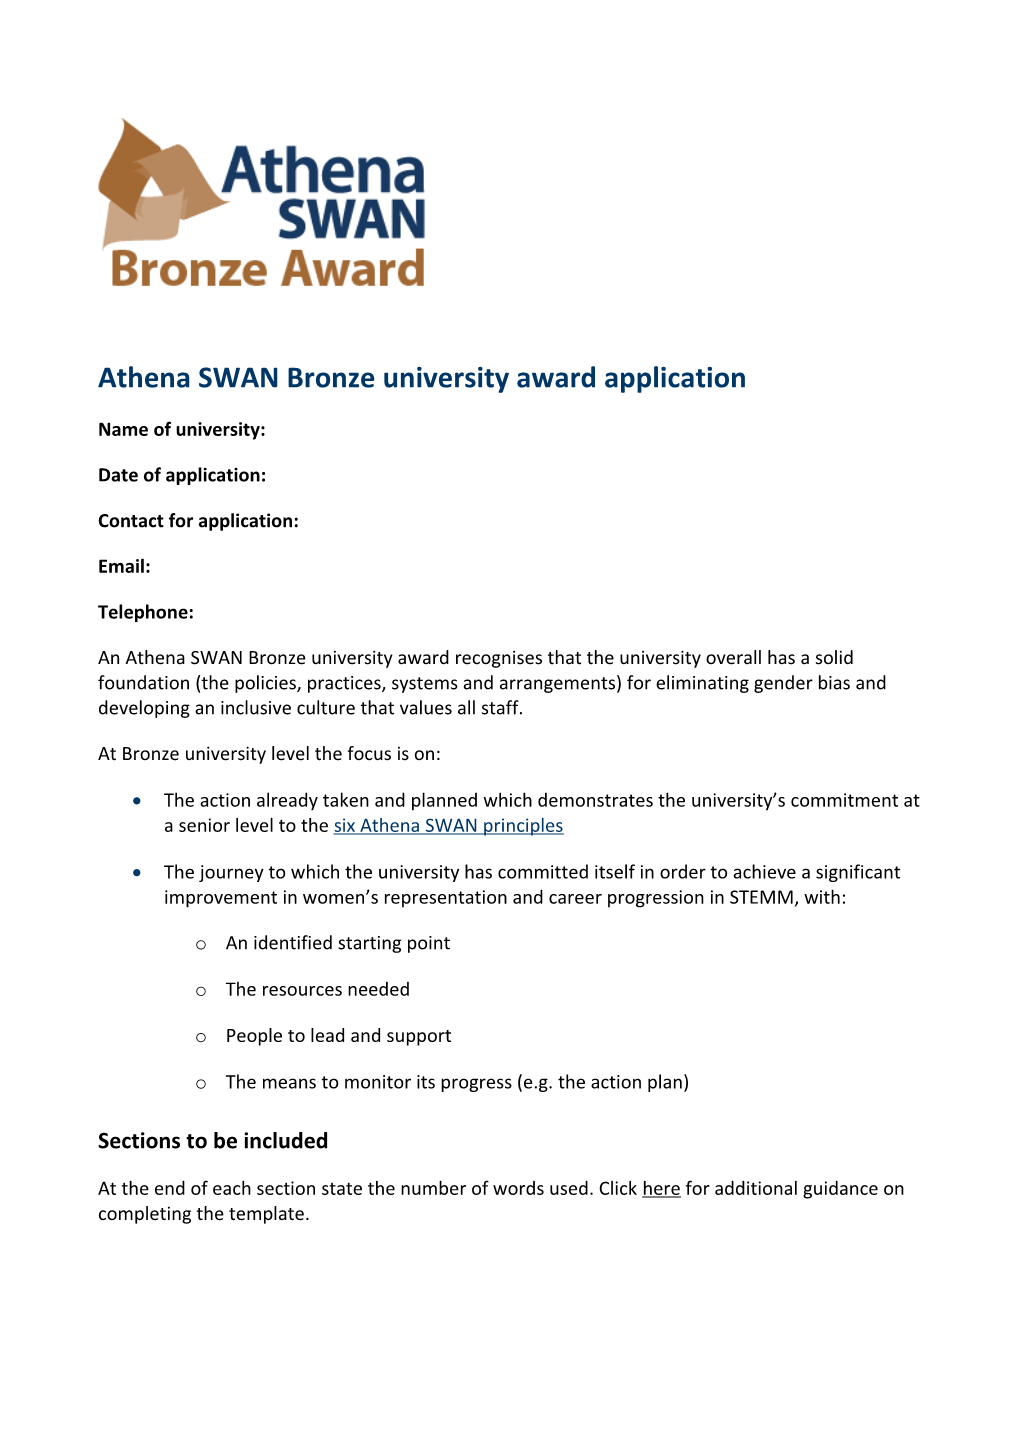 Athena SWAN Bronze University Award Application